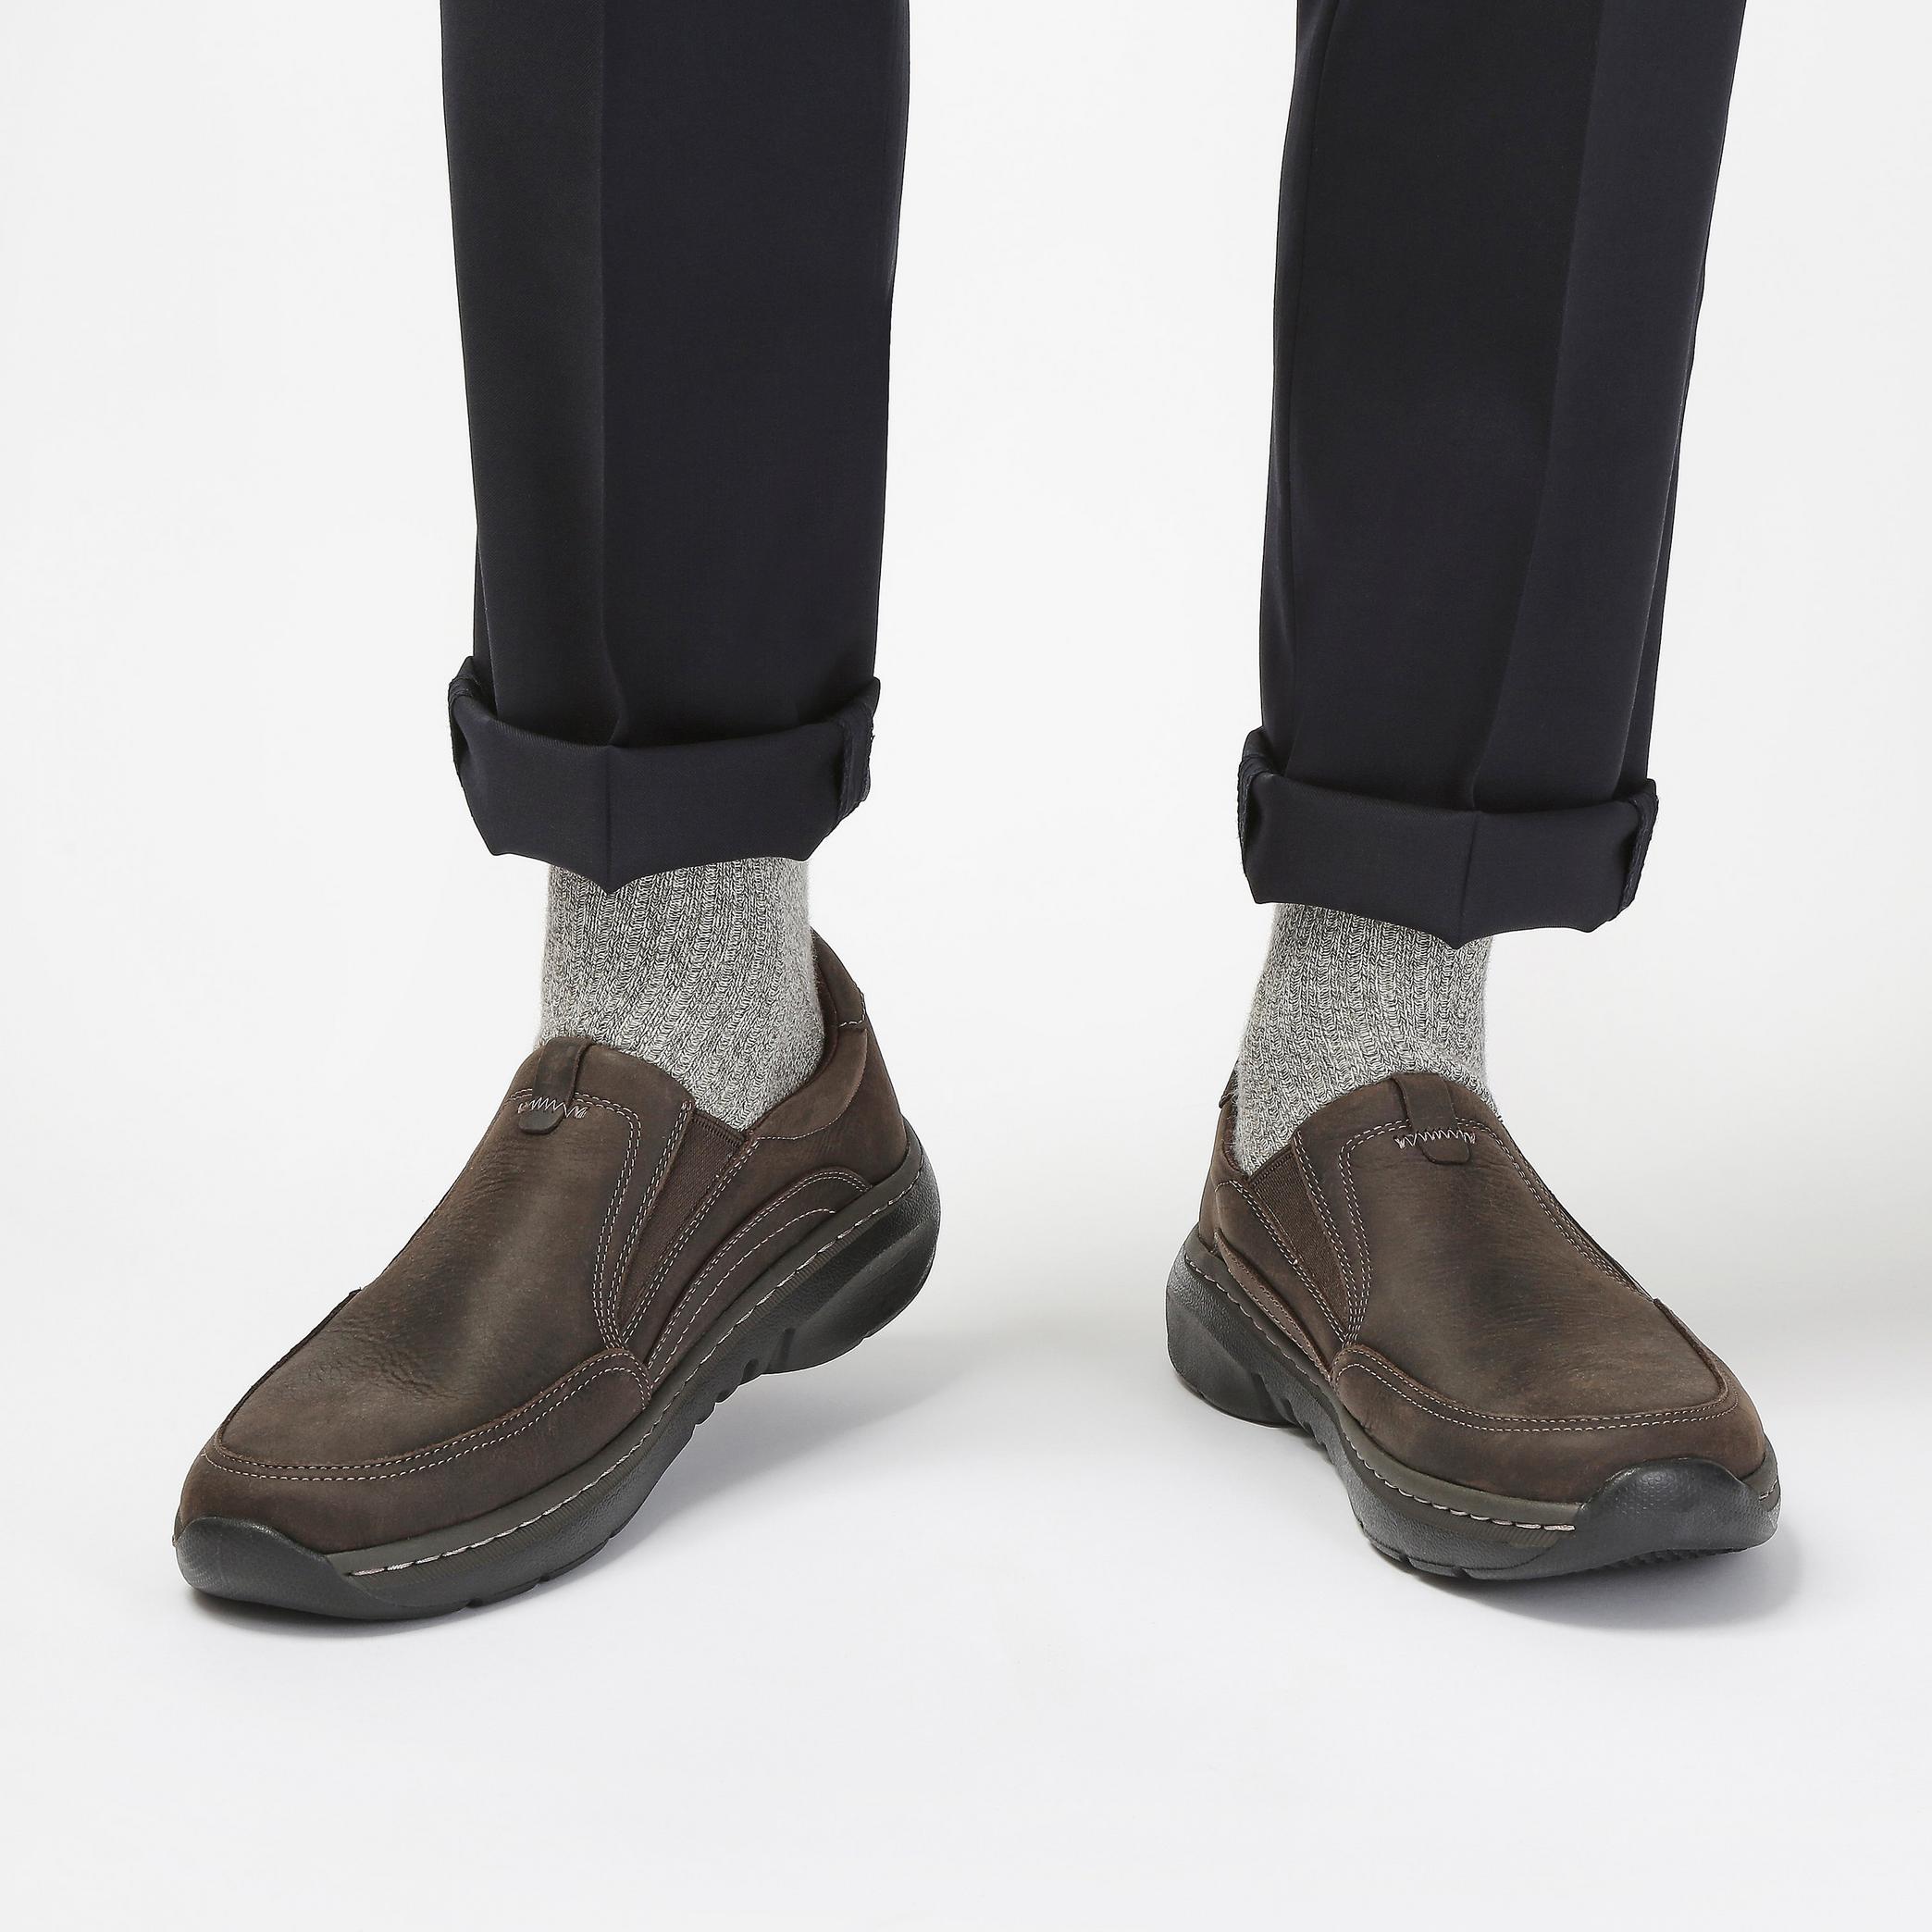 Men ClarksPro Step Dark Brn Tumbled Shoes | Clarks US